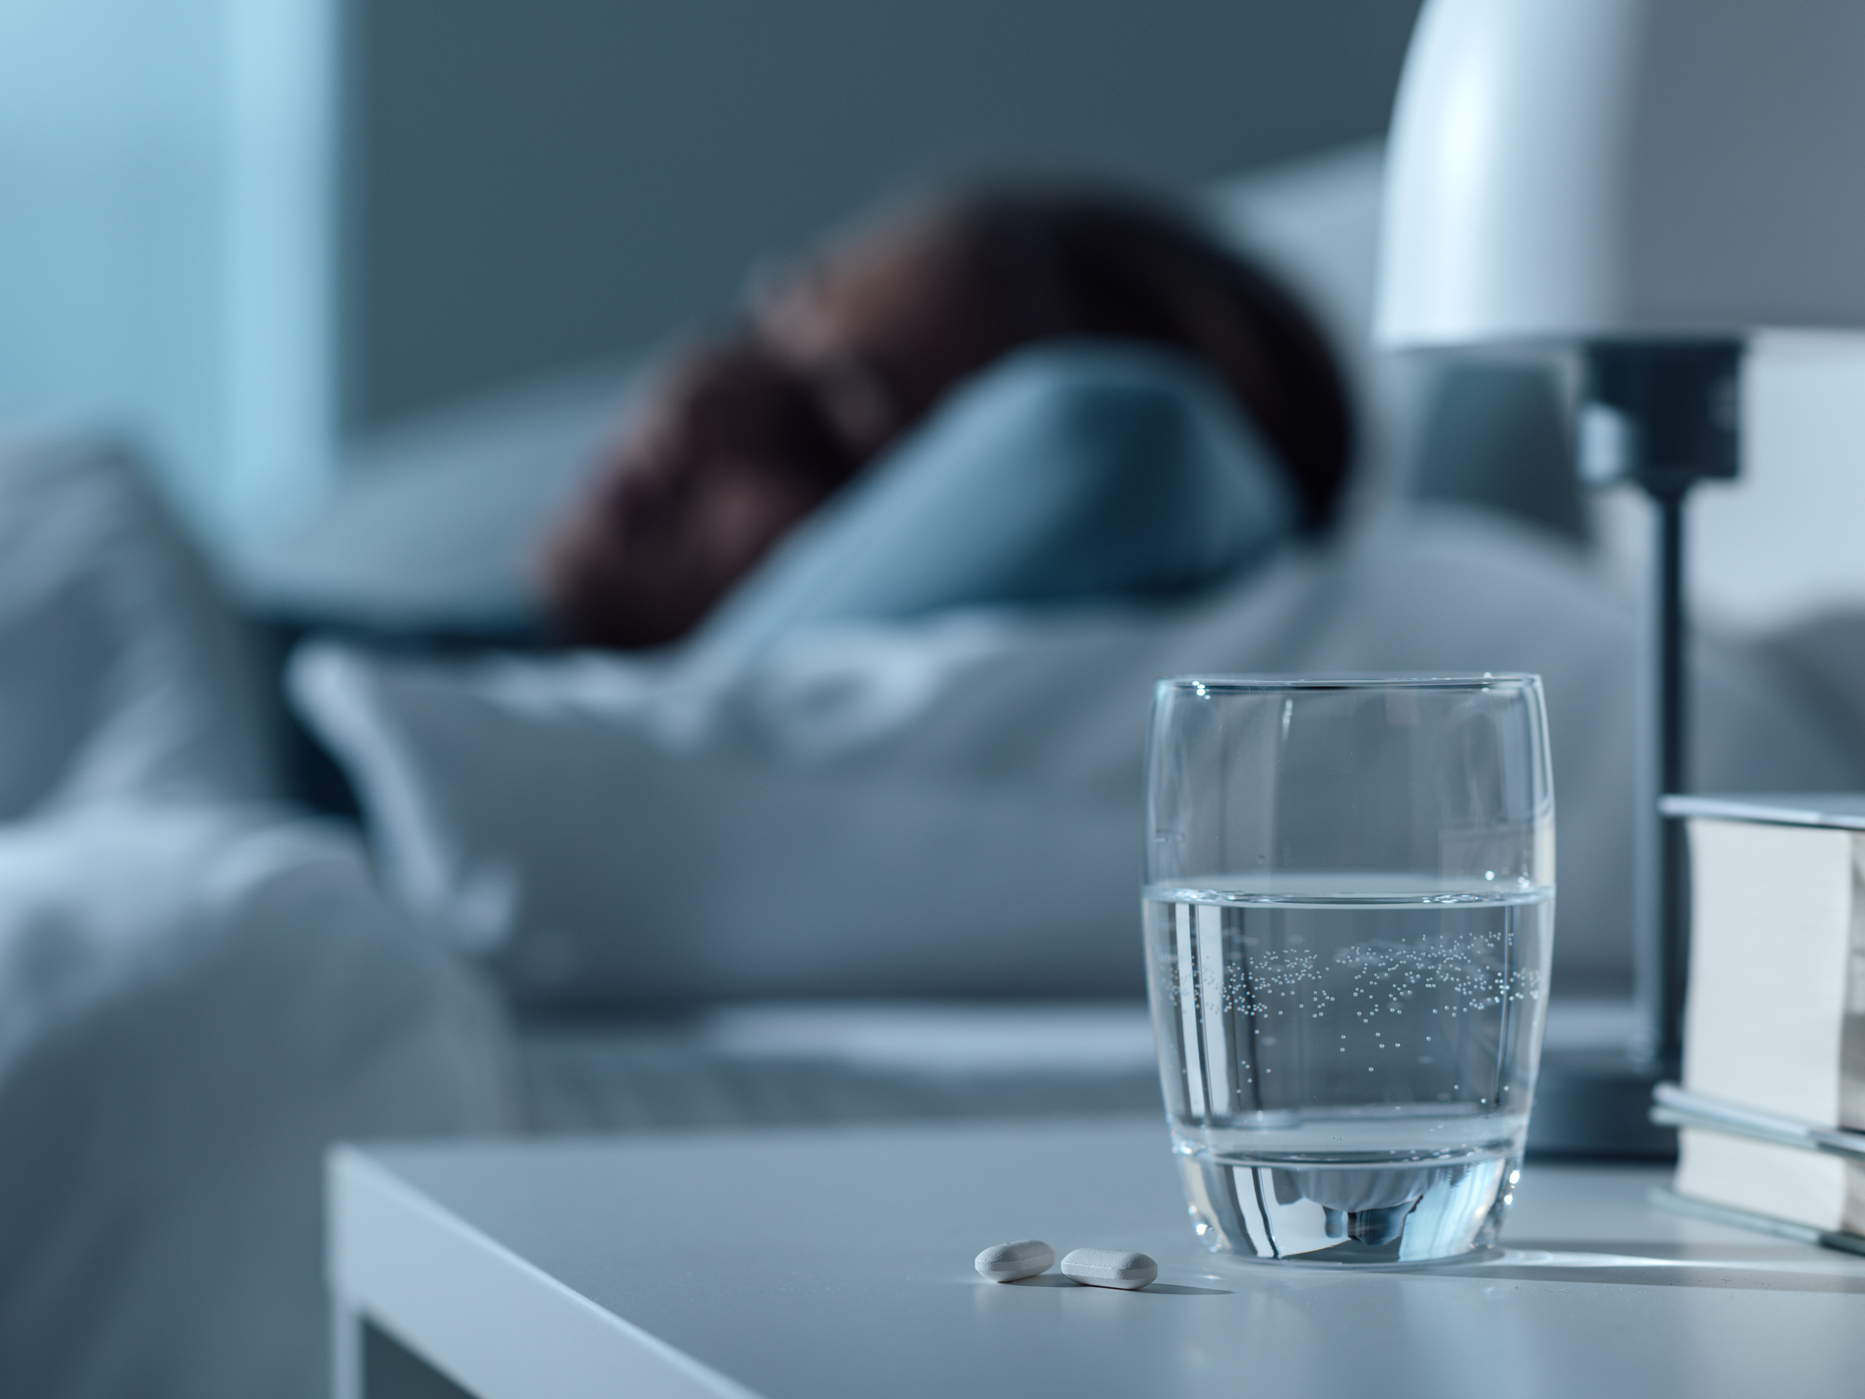 The fatal side effect of prescription sleep aids